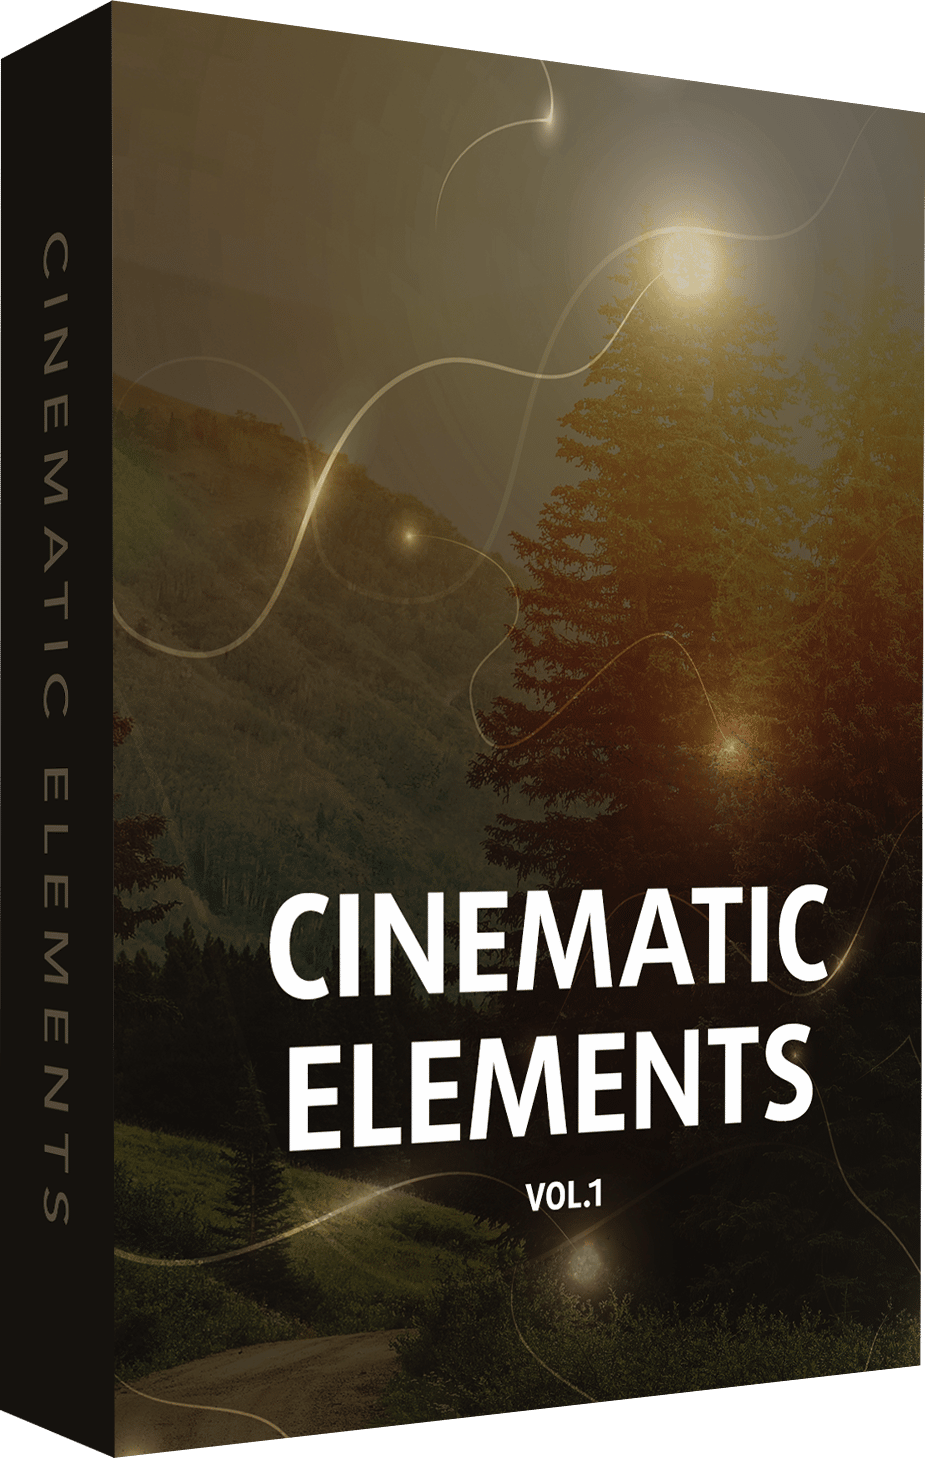 Cinematic Elements Vol 1 - free sample pack